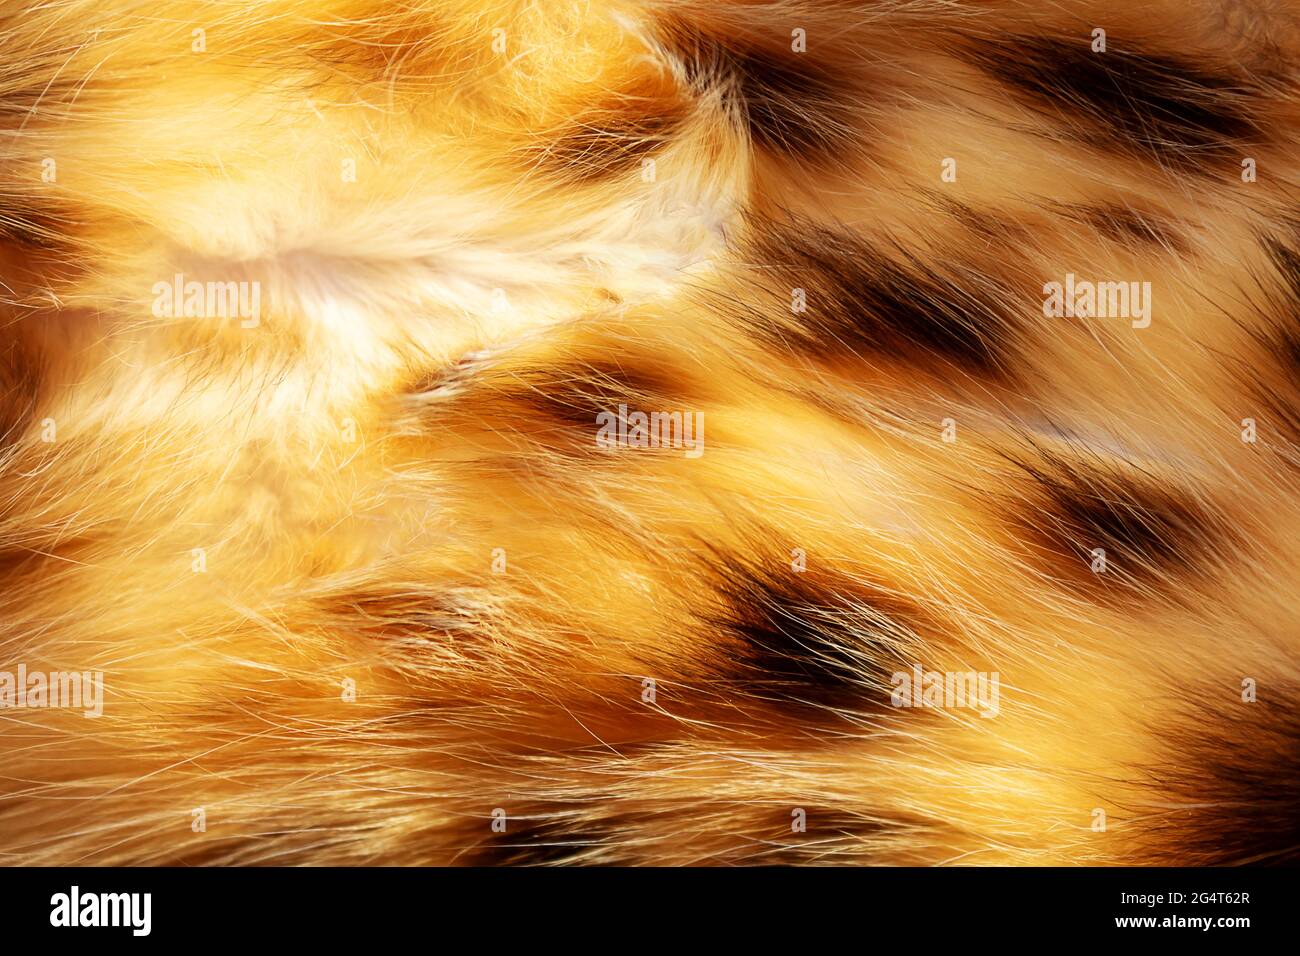 Cat fur texture -Fotos und -Bildmaterial in hoher Auflösung – Alamy